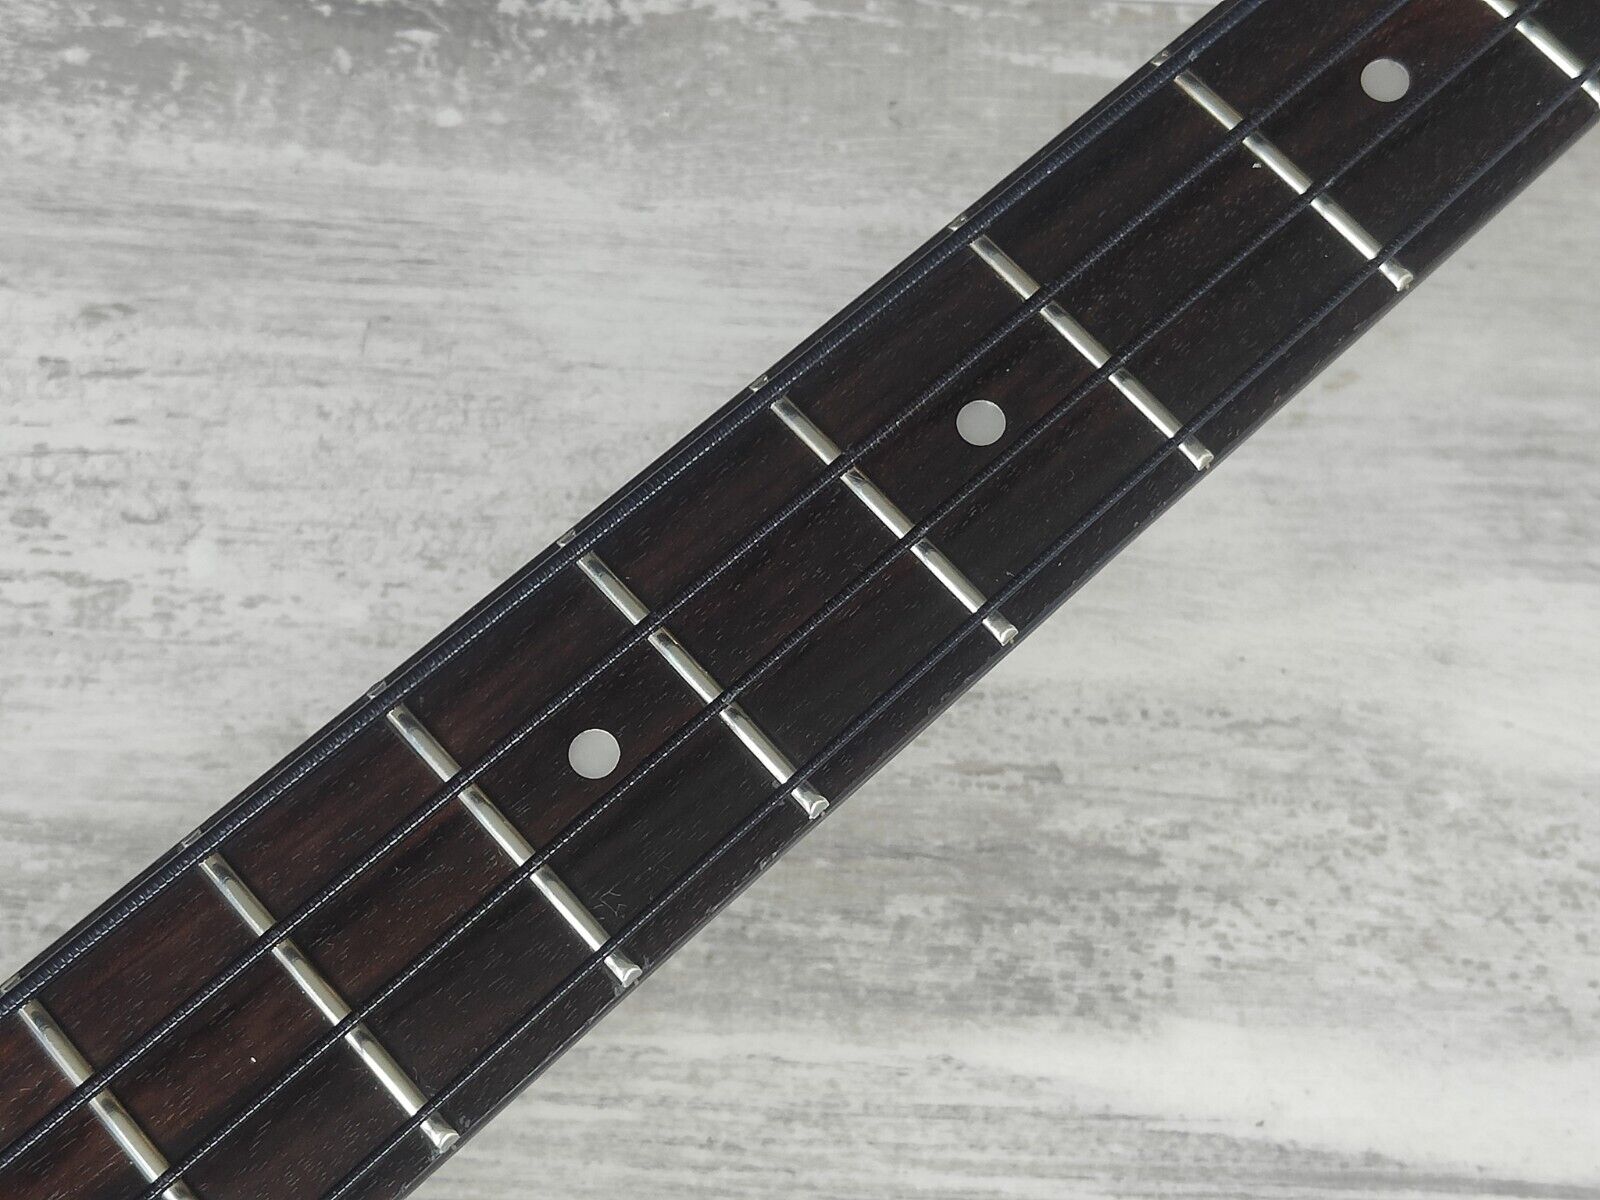 Aria Diamond Mosrite Style DMB380 Bass Guitar (Sunburst)